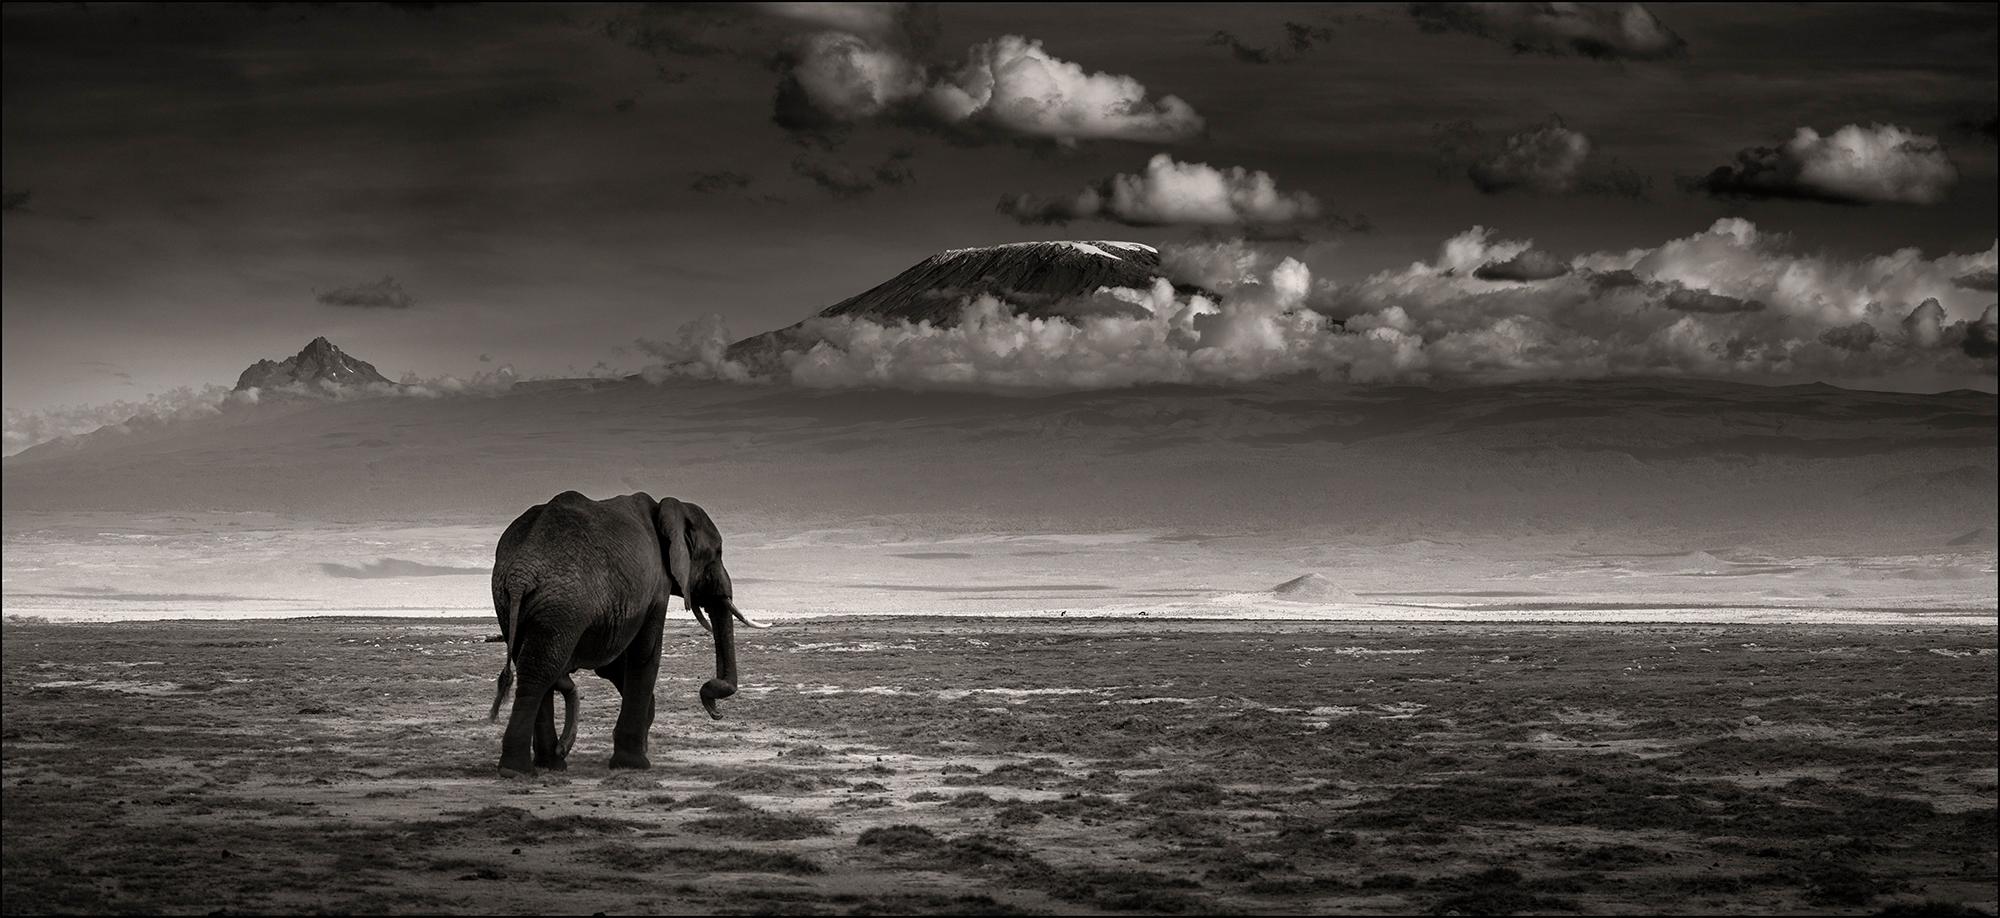 Joachim Schmeisser Landscape Photograph - Big bull walking, Elephant, black and white photography, wildlife